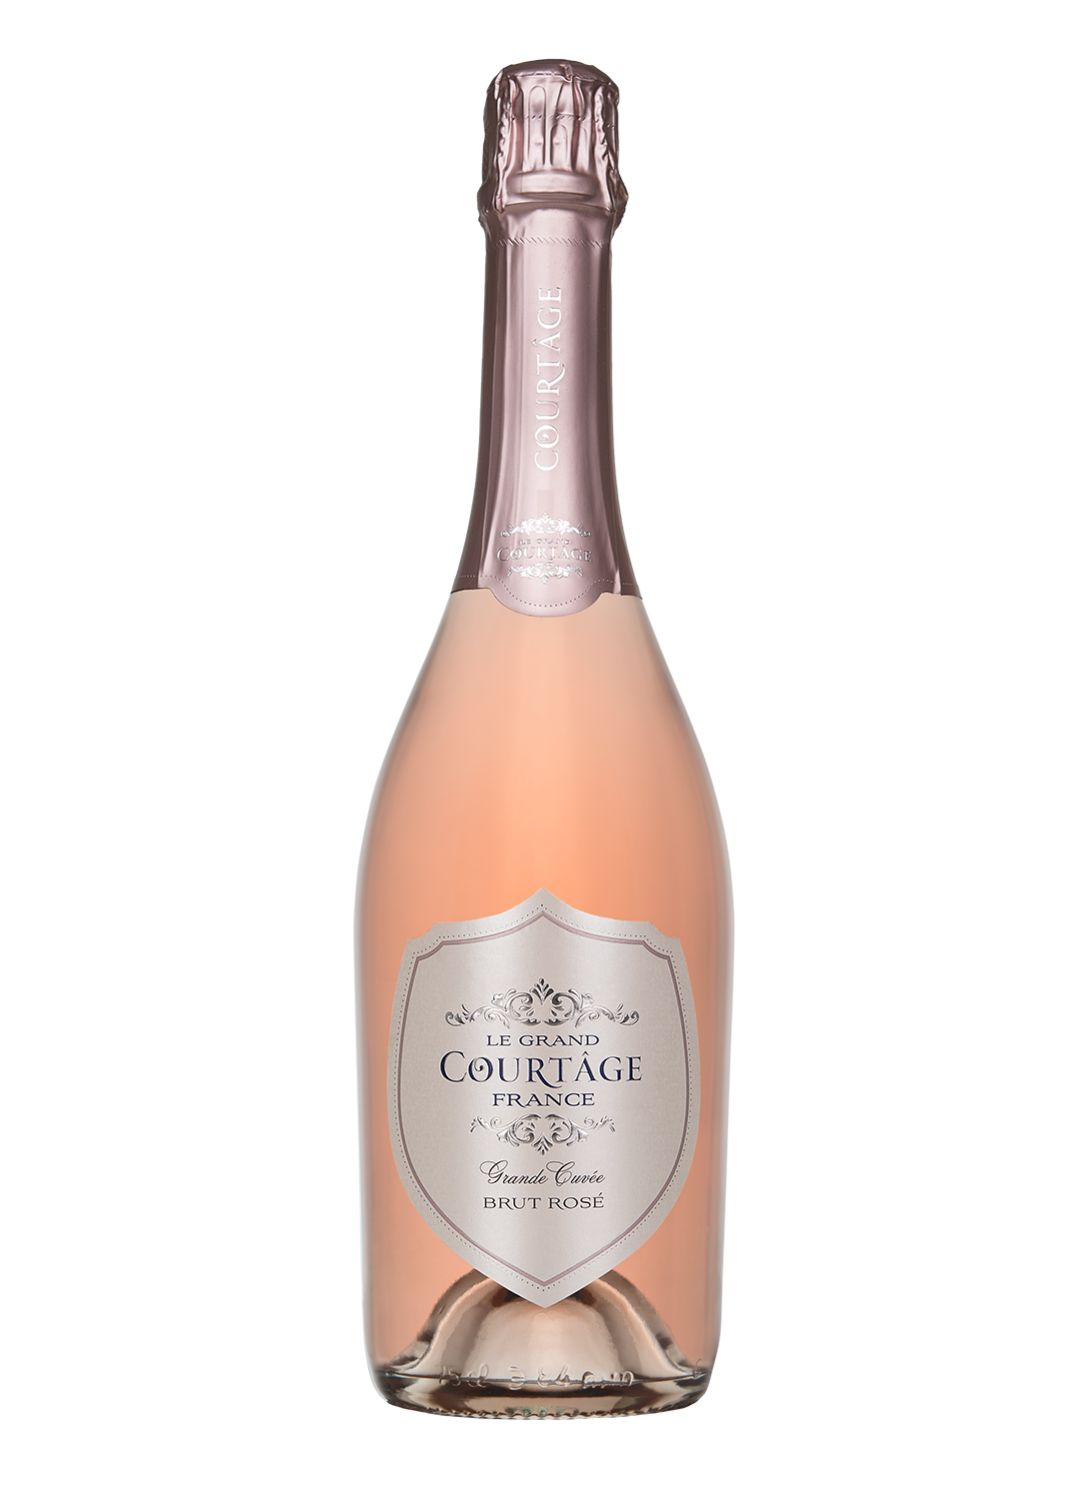 Bottle of Le Grand Courtâge Brut Rosé French Sparkling Wine